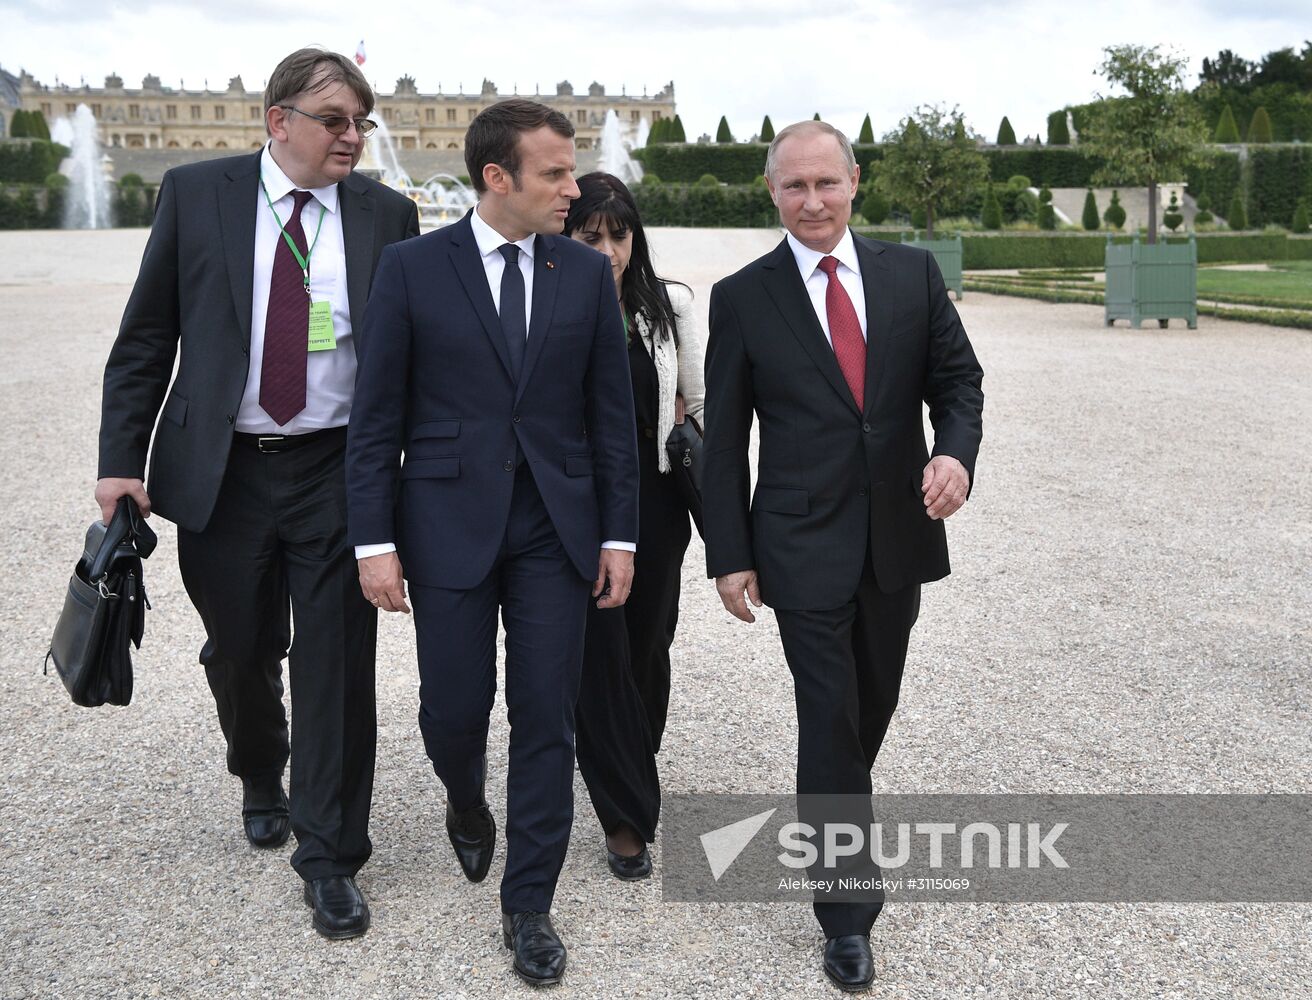 Russian President Vladimir Putin's visit to Paris